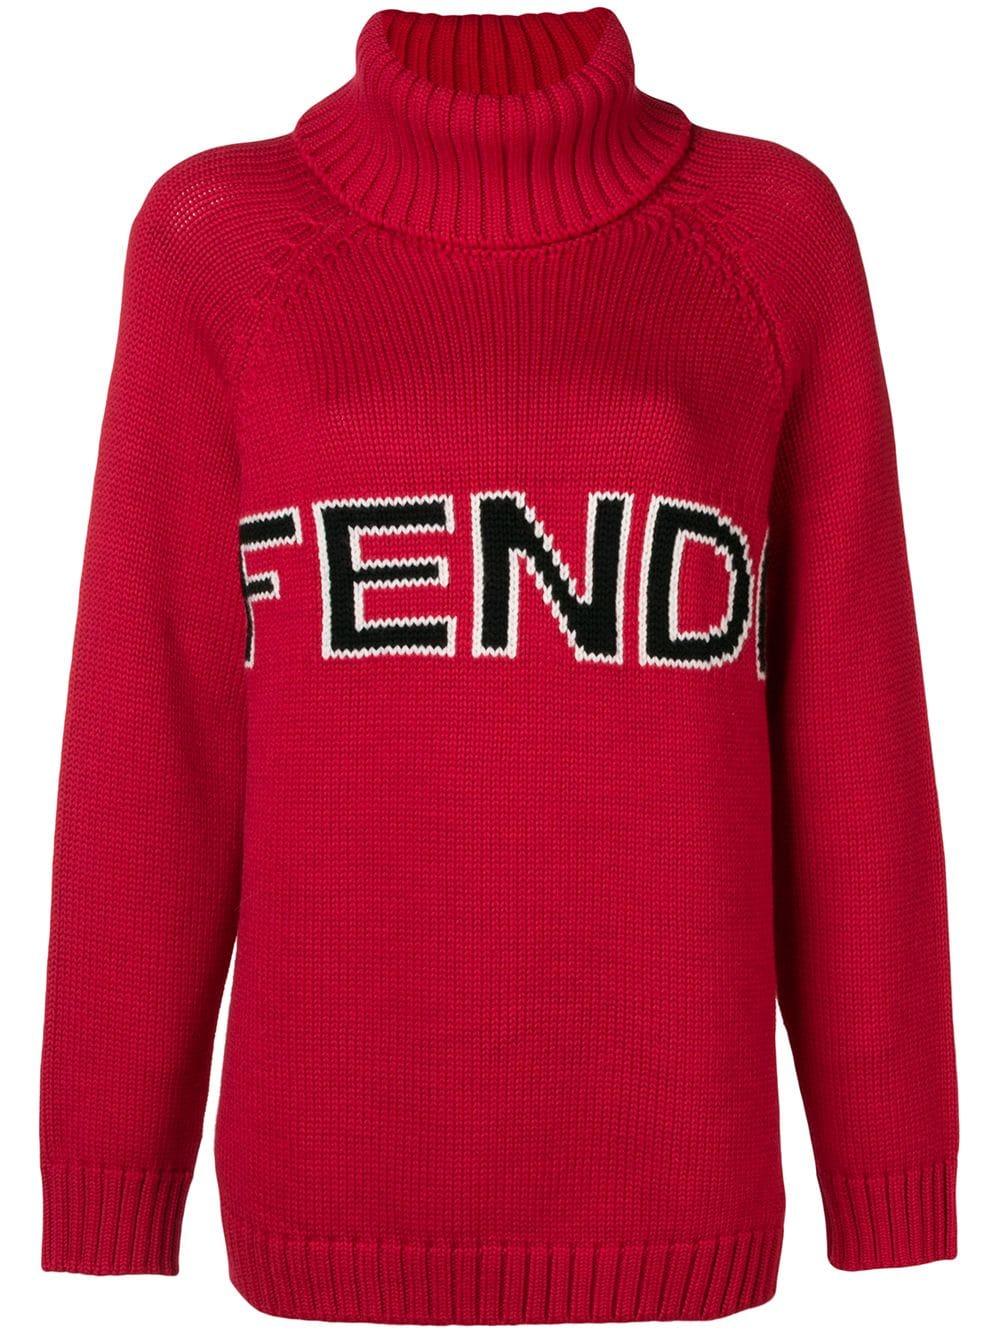 Fendi Intarsia-knit Wool Turtleneck Sweater in Red - Lyst